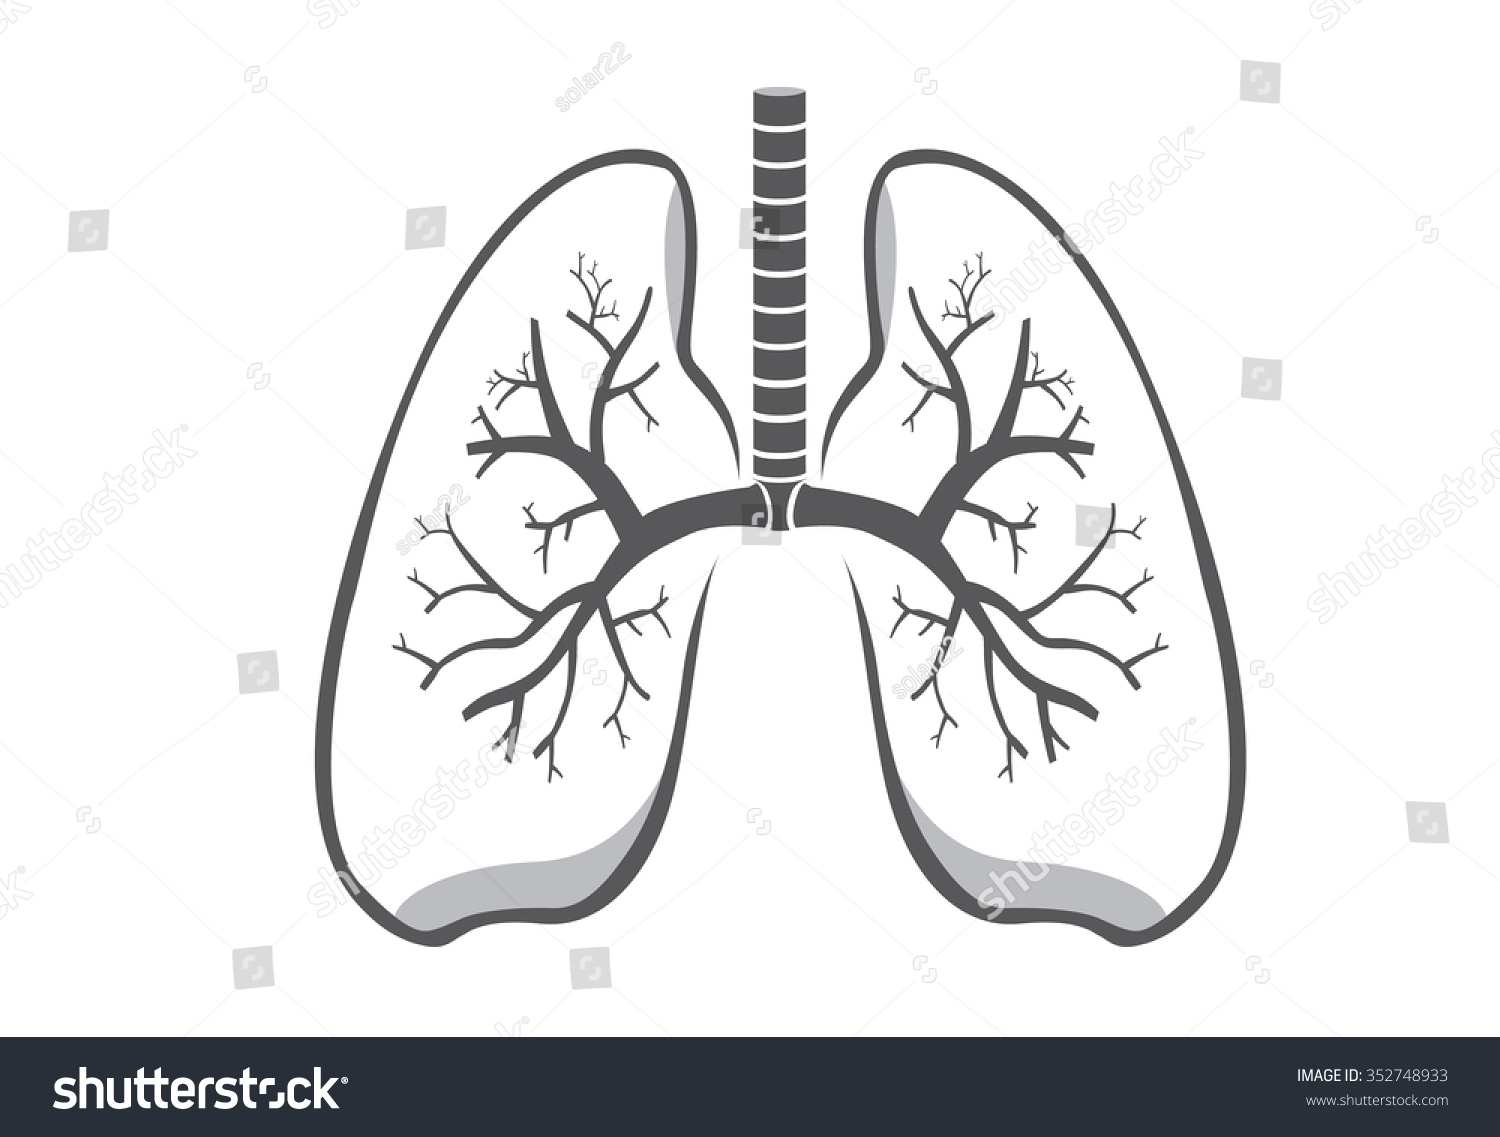 lung cancer logo clip art free - photo #47